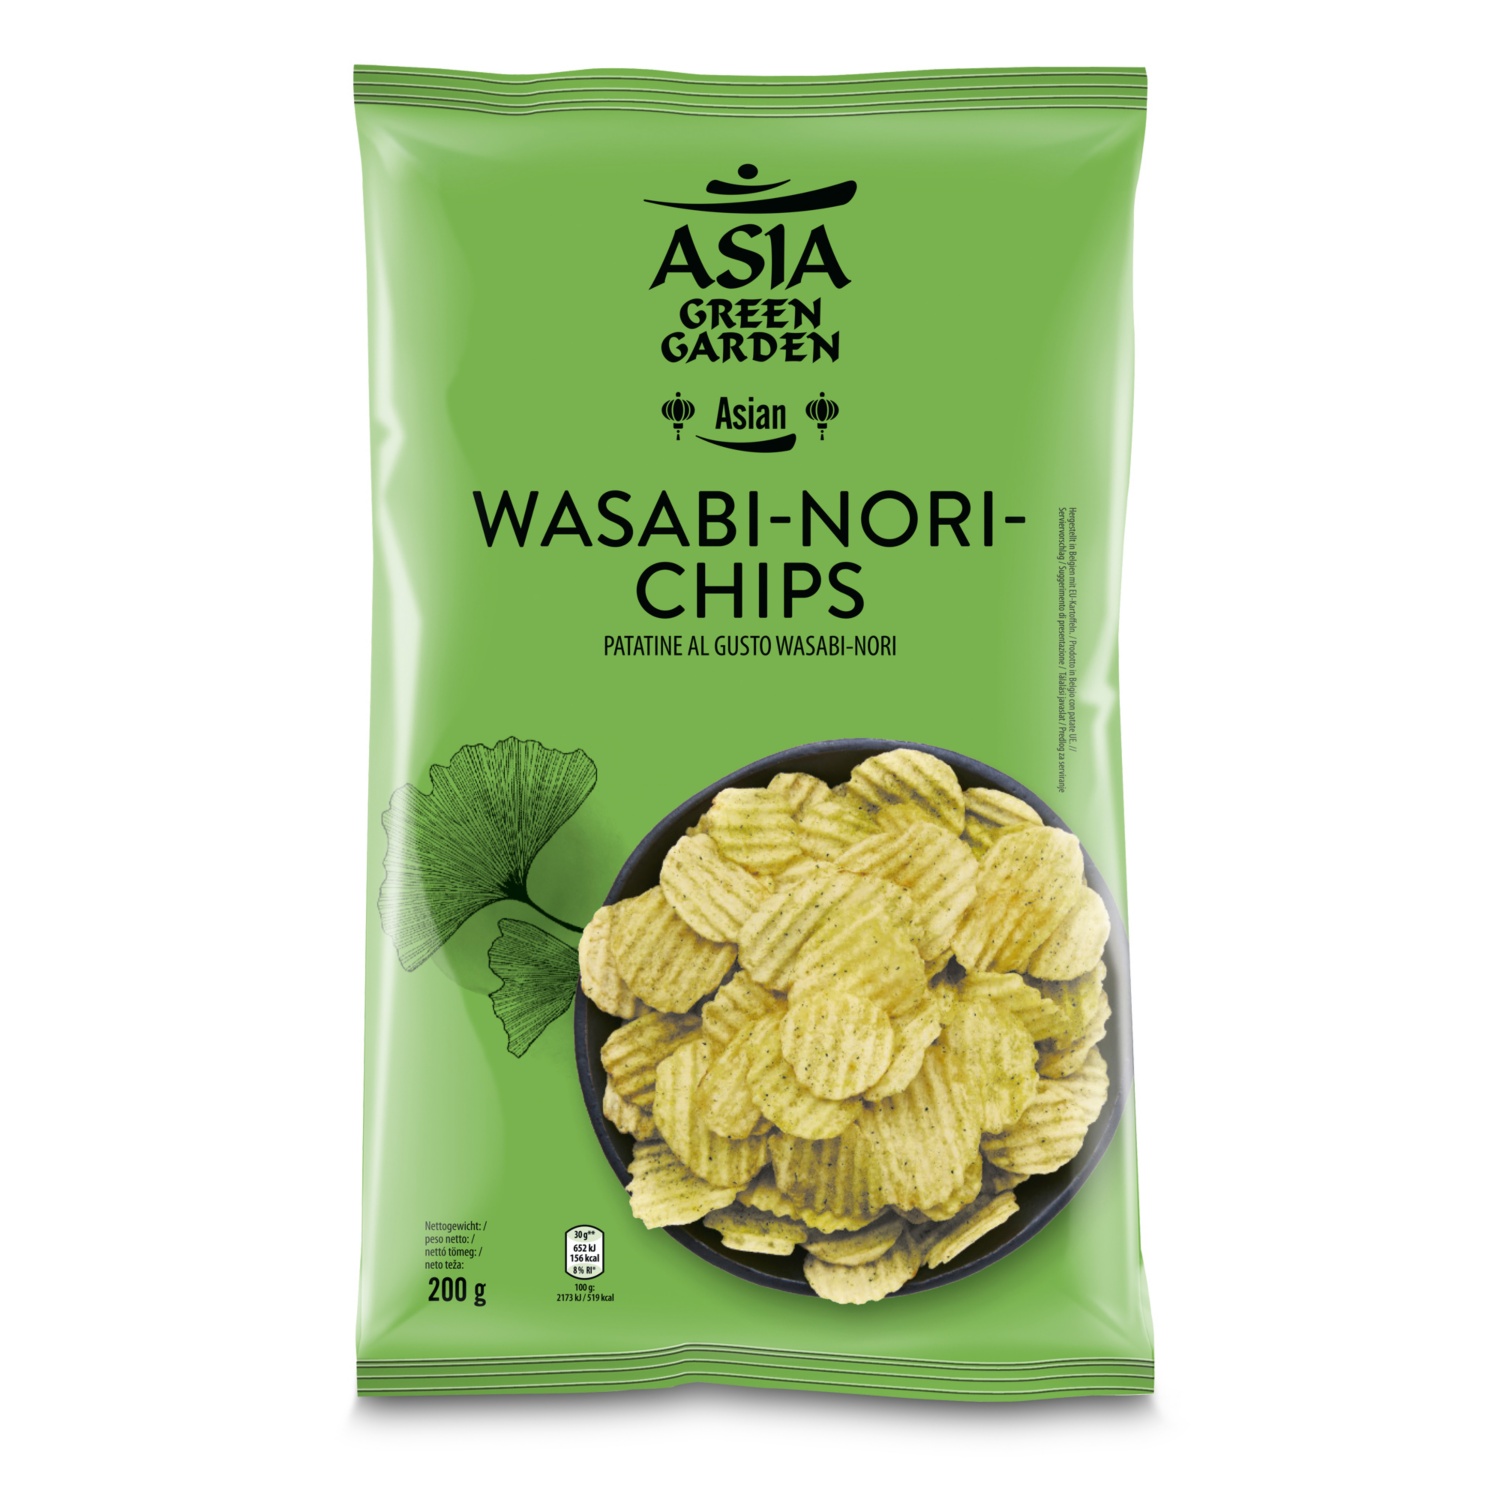 ASIA GREEN GARDEN Patatine gusto wasabi-nori